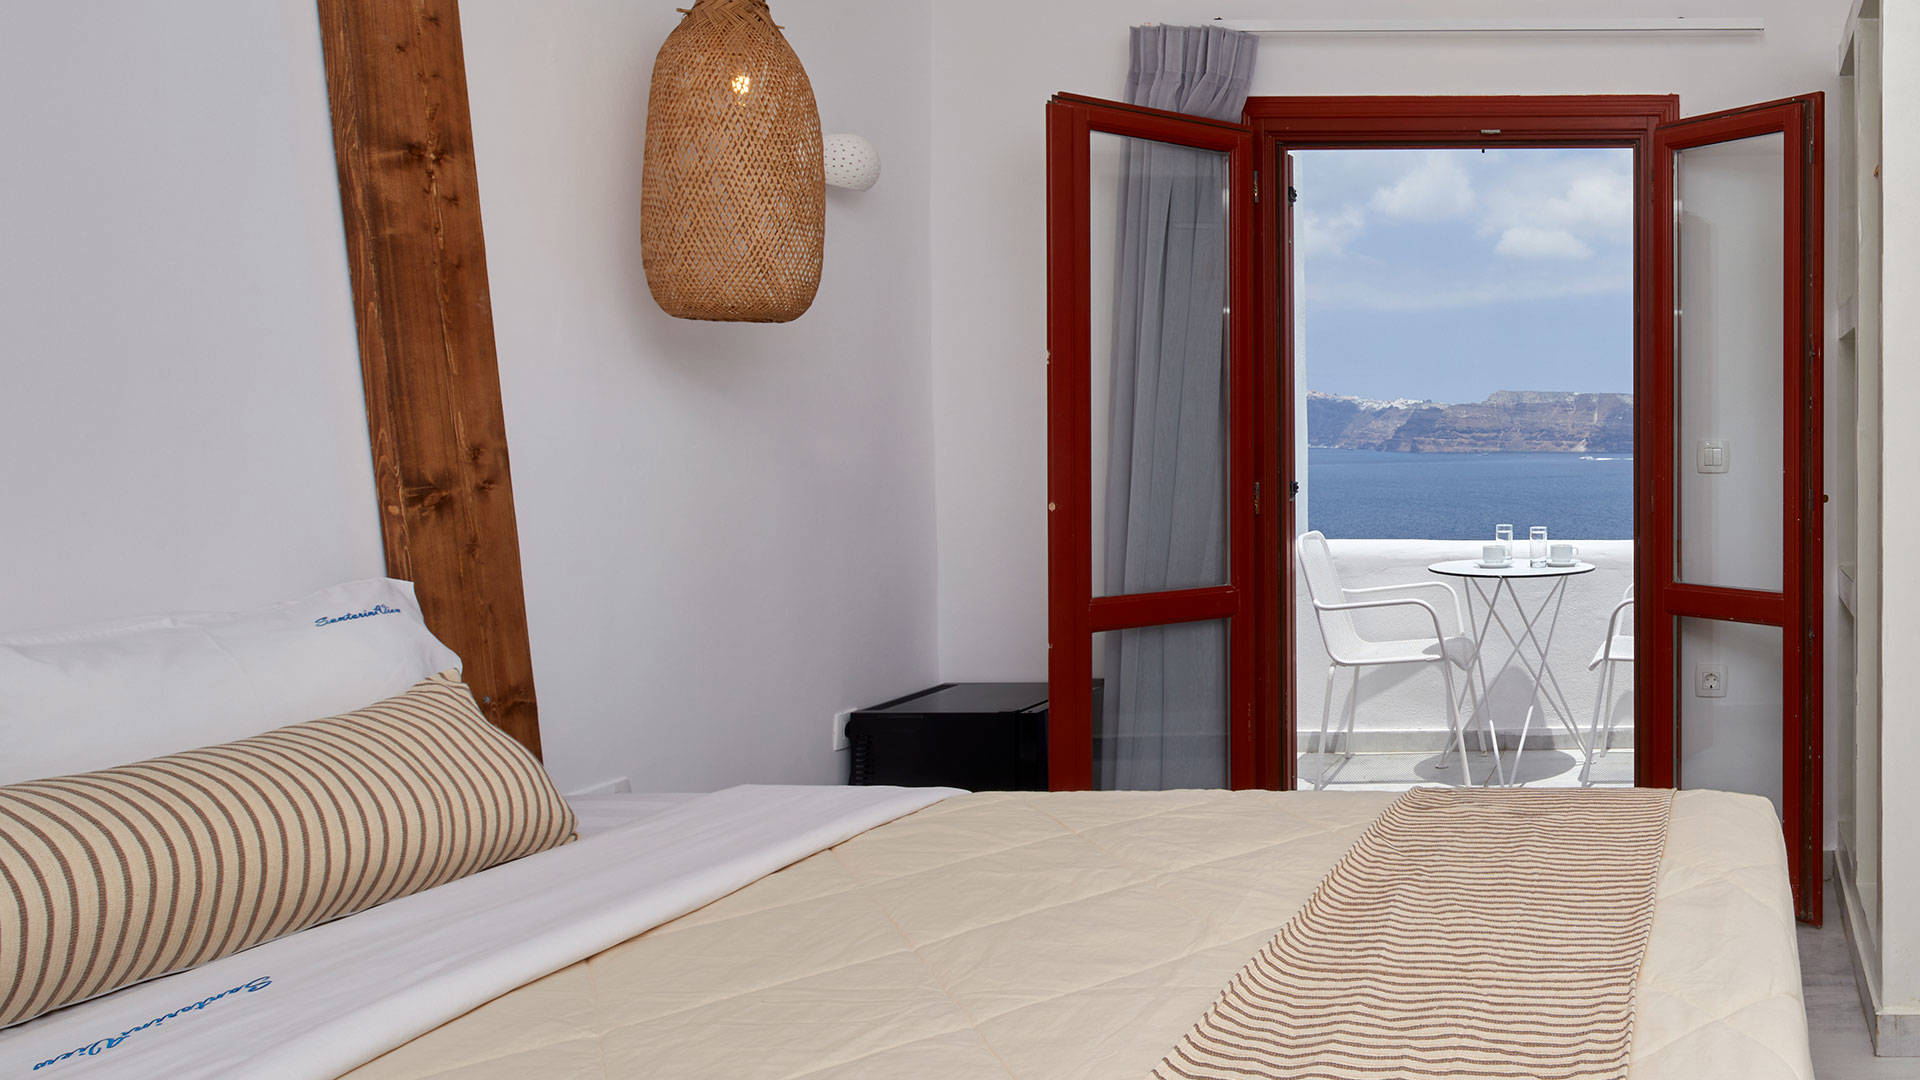 
Santorini View Hotel bedroom with sea view